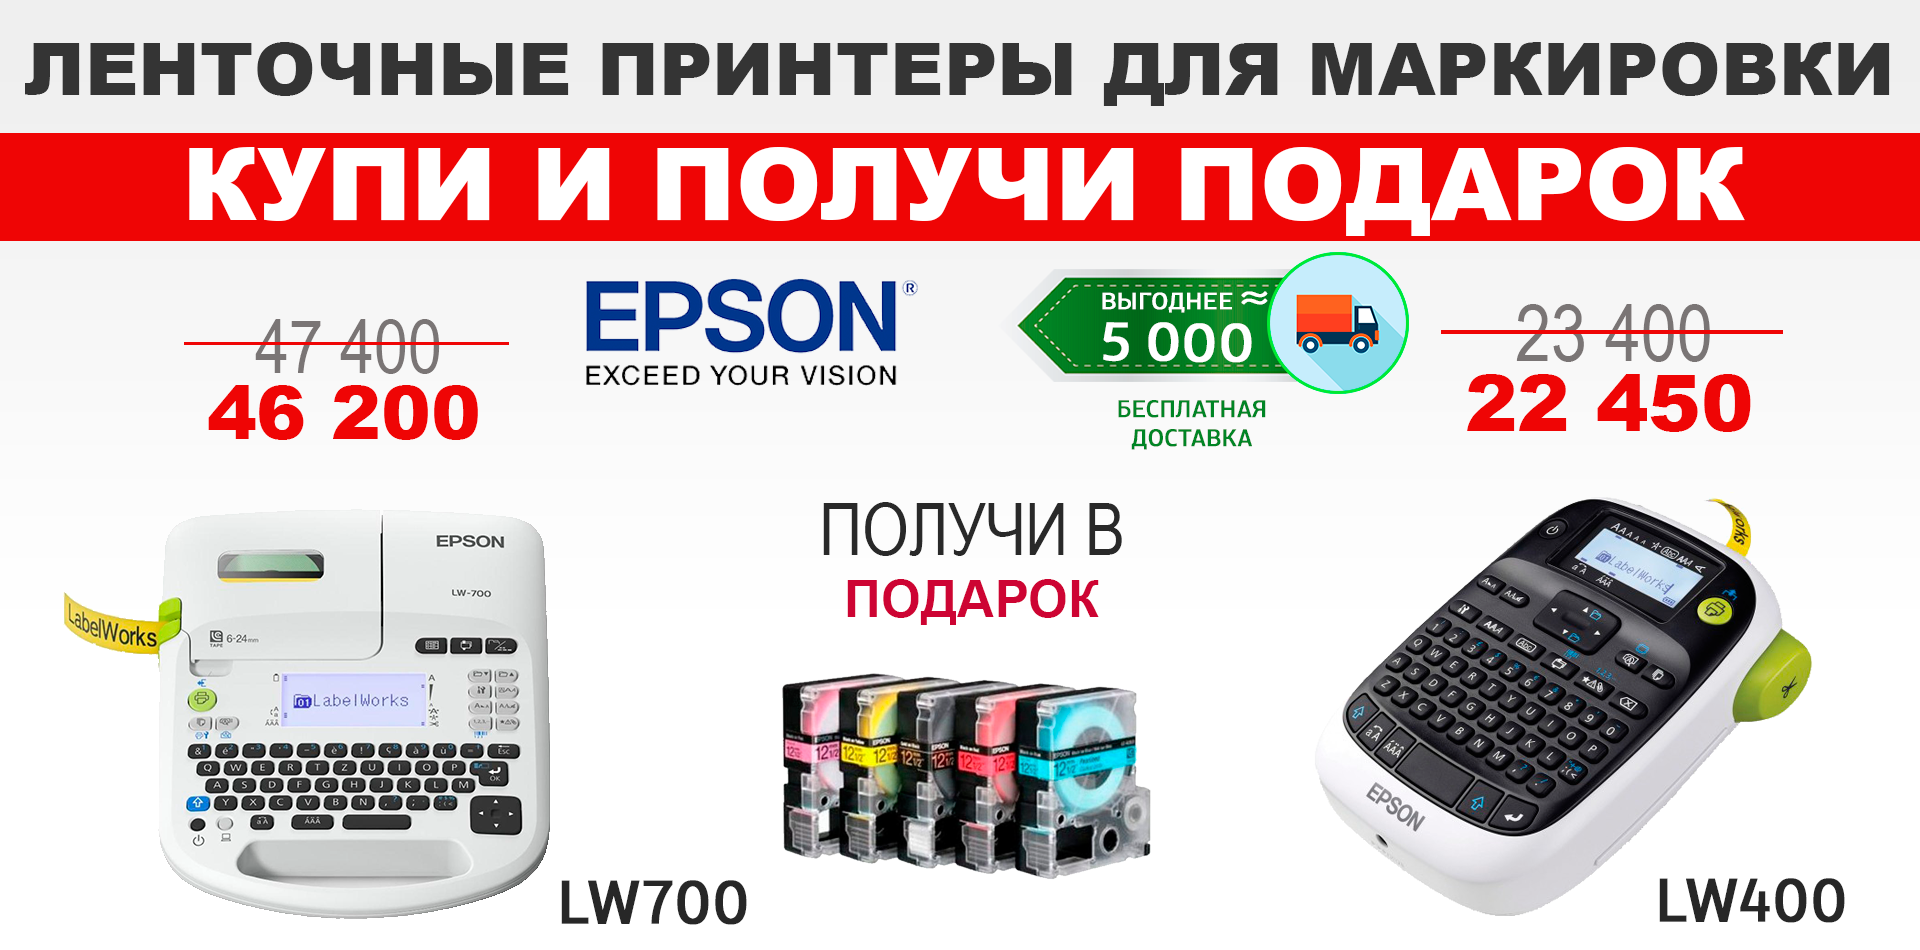 Epson LabelWorks LW-400